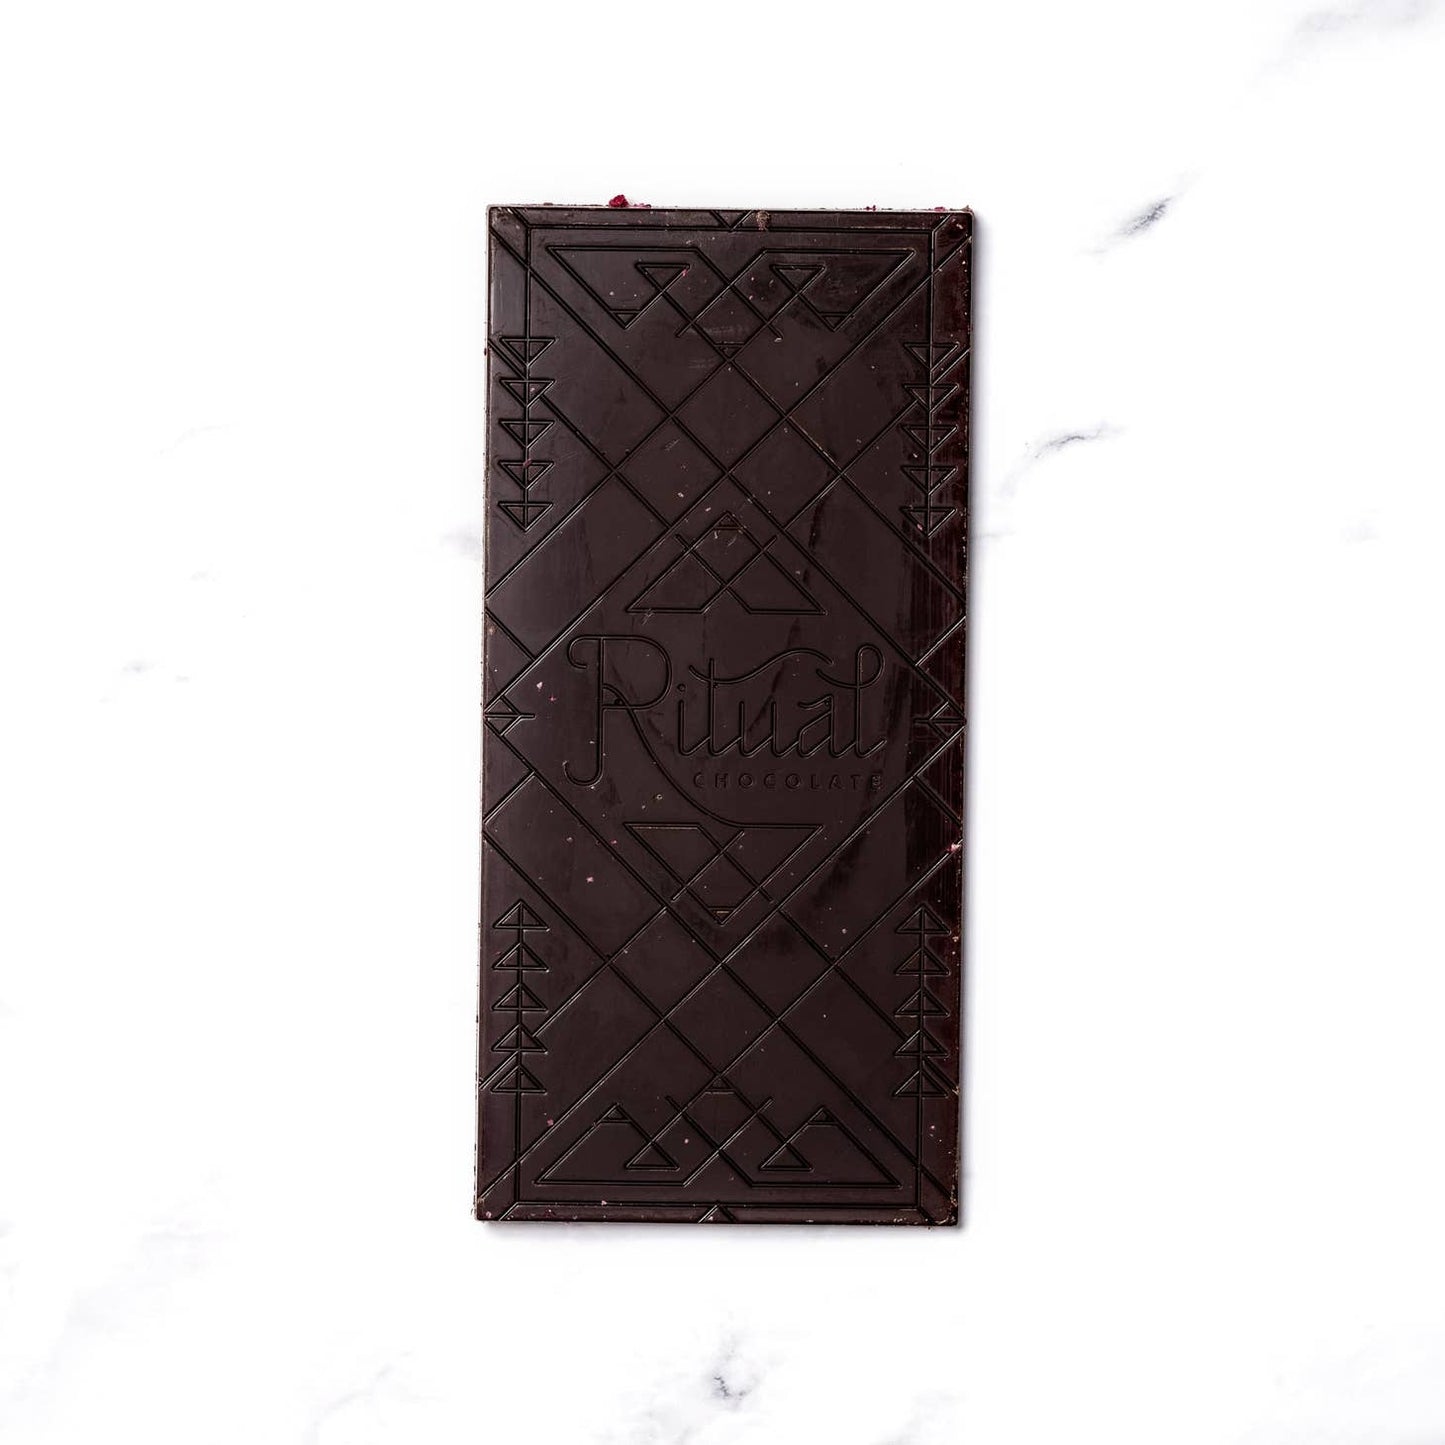 Ritual Chocolate - The Apres Chocolate, 70% Cacao